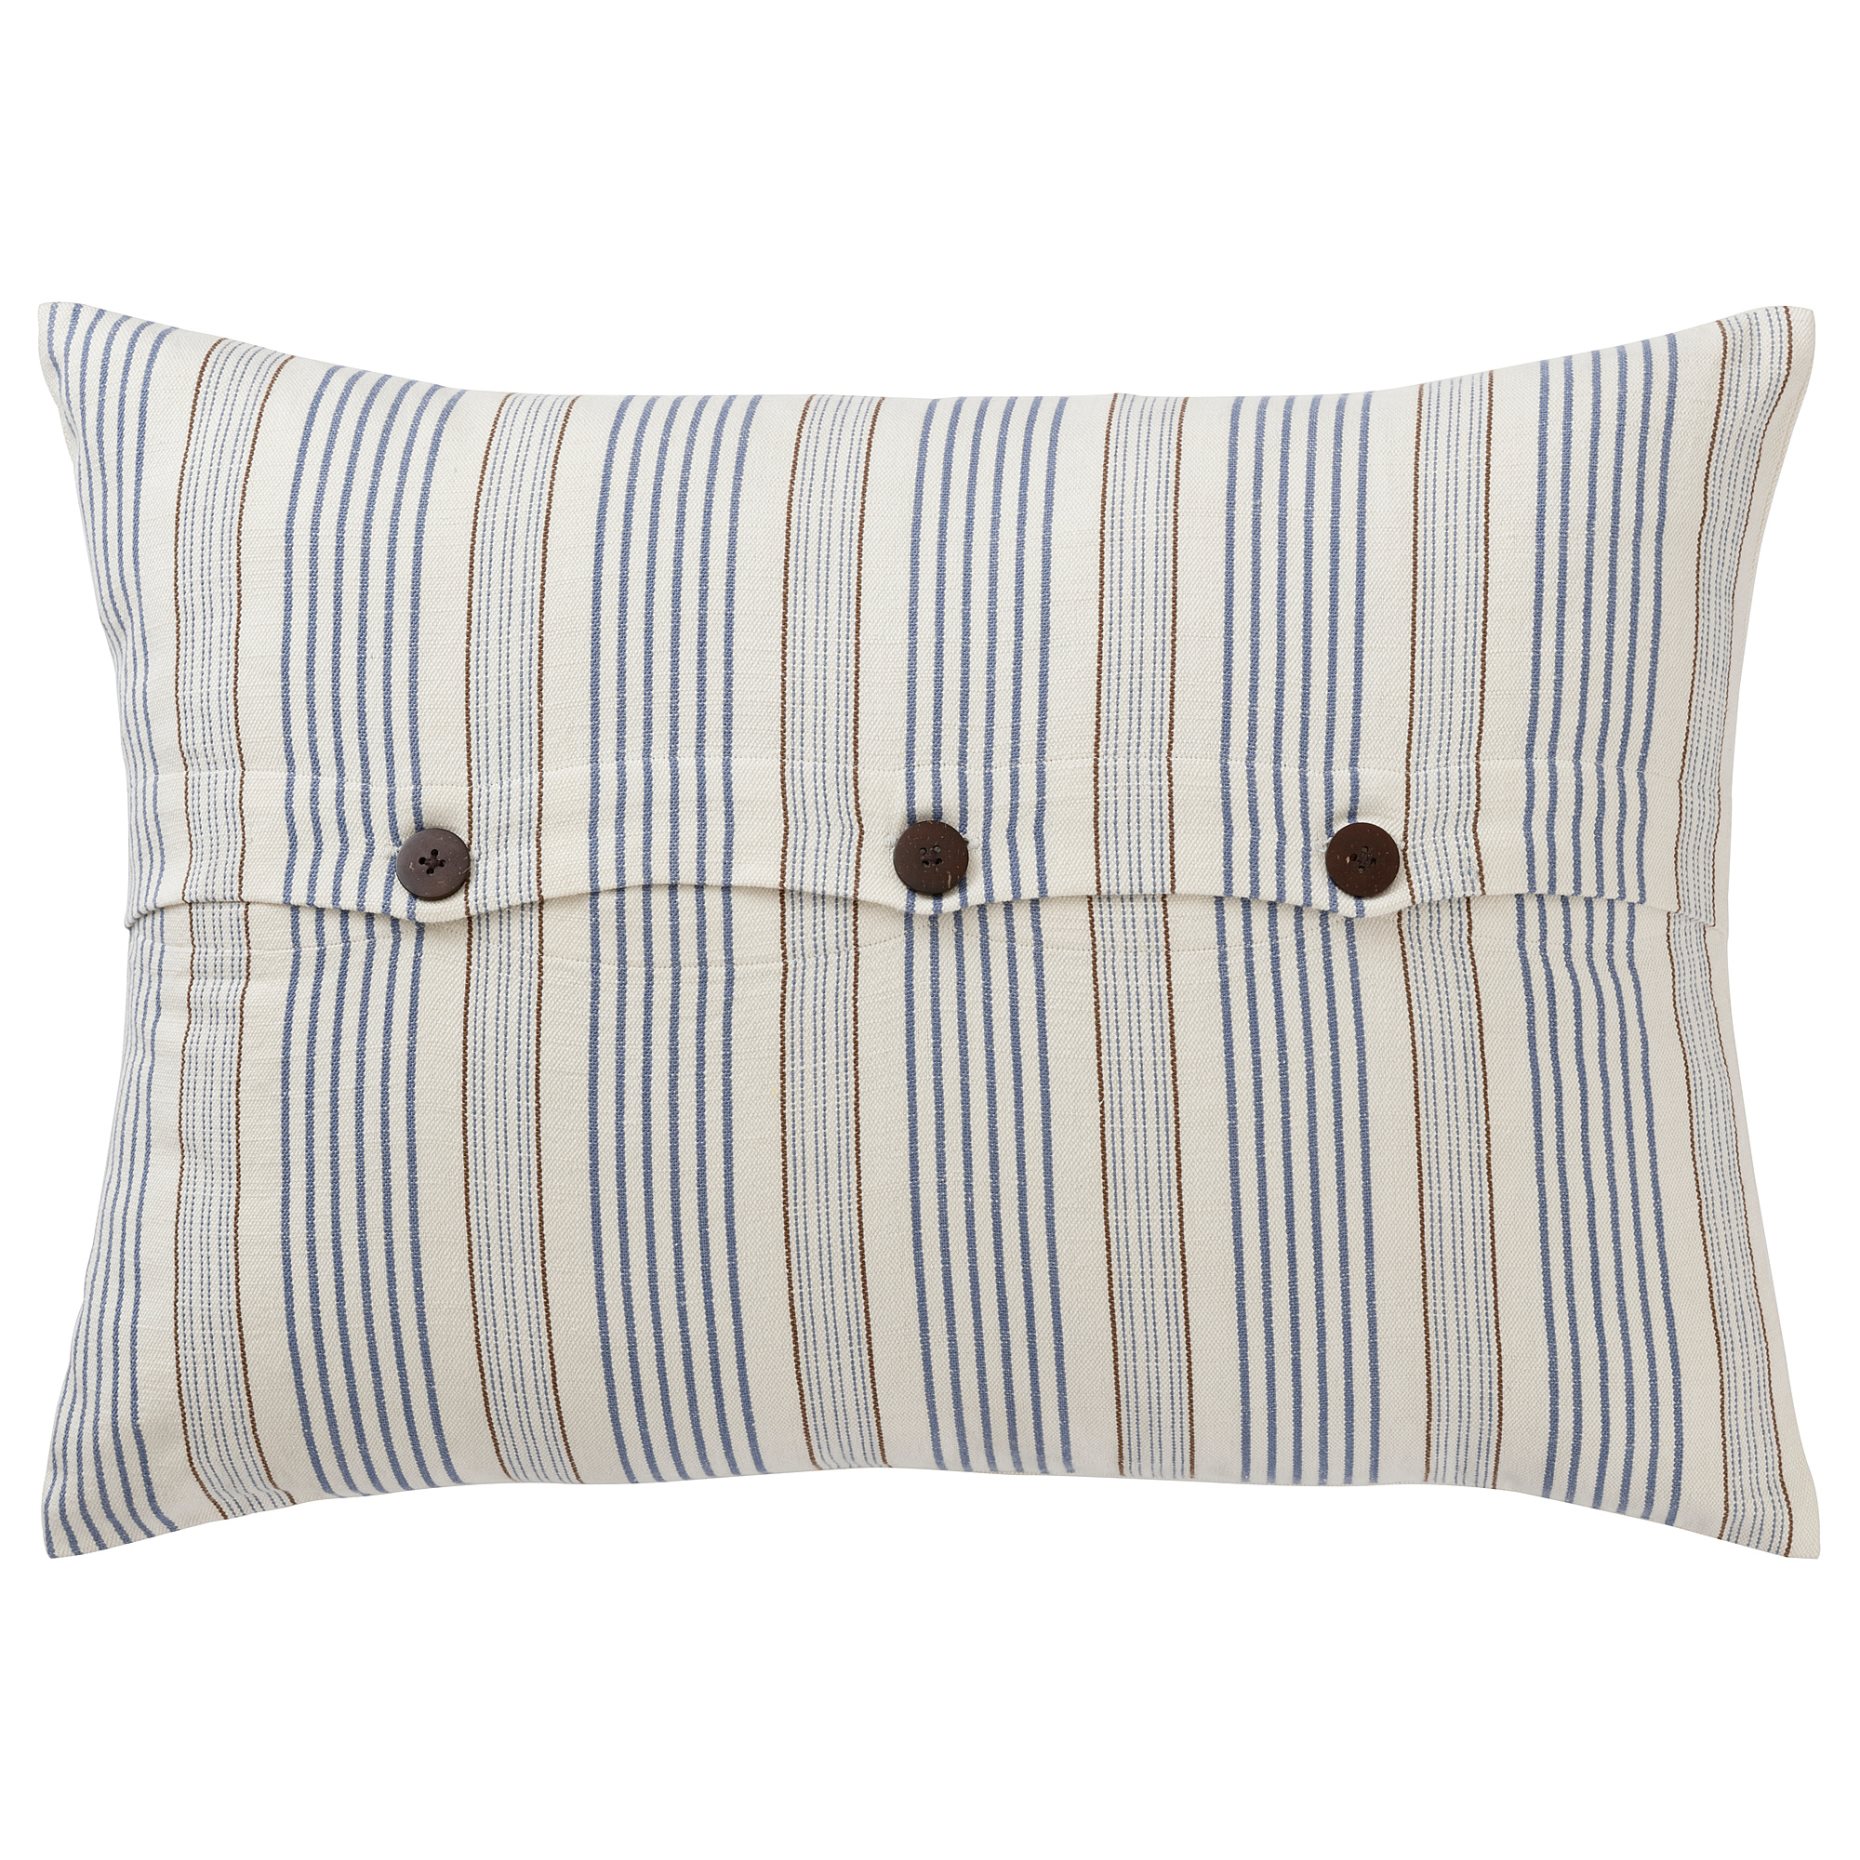 AKERNEJLIKA, cushion cover/embroidery, 40x58 cm, 605.701.77